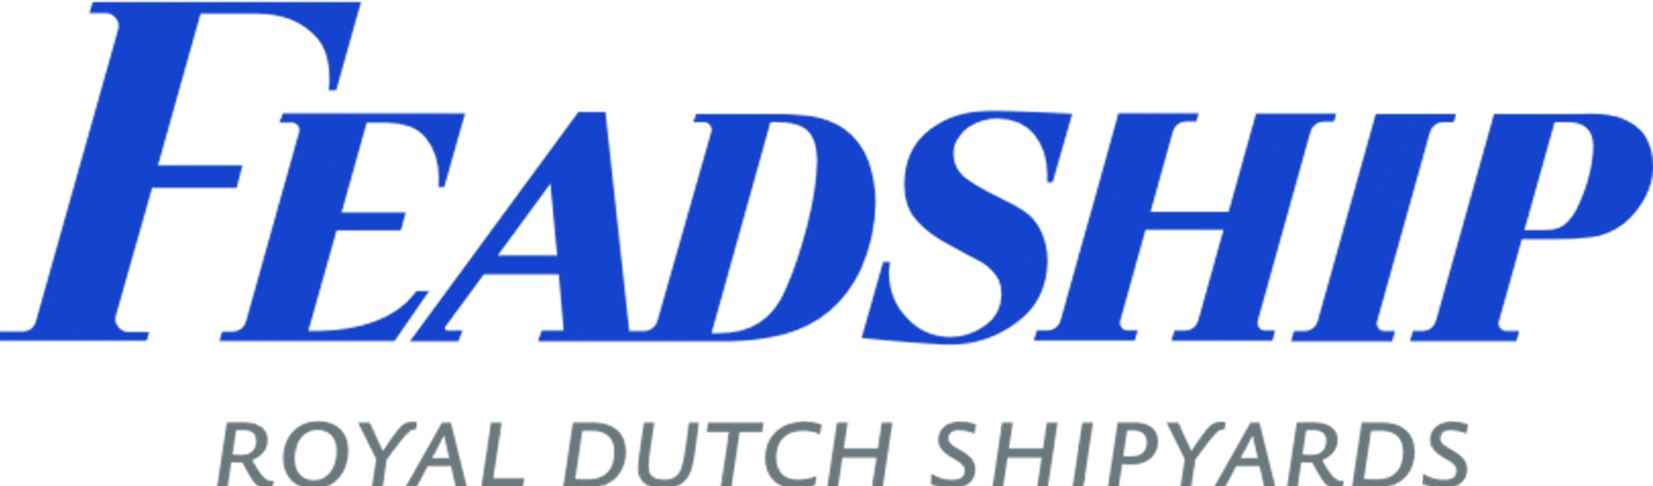 Feadship logo Metalfinish Group